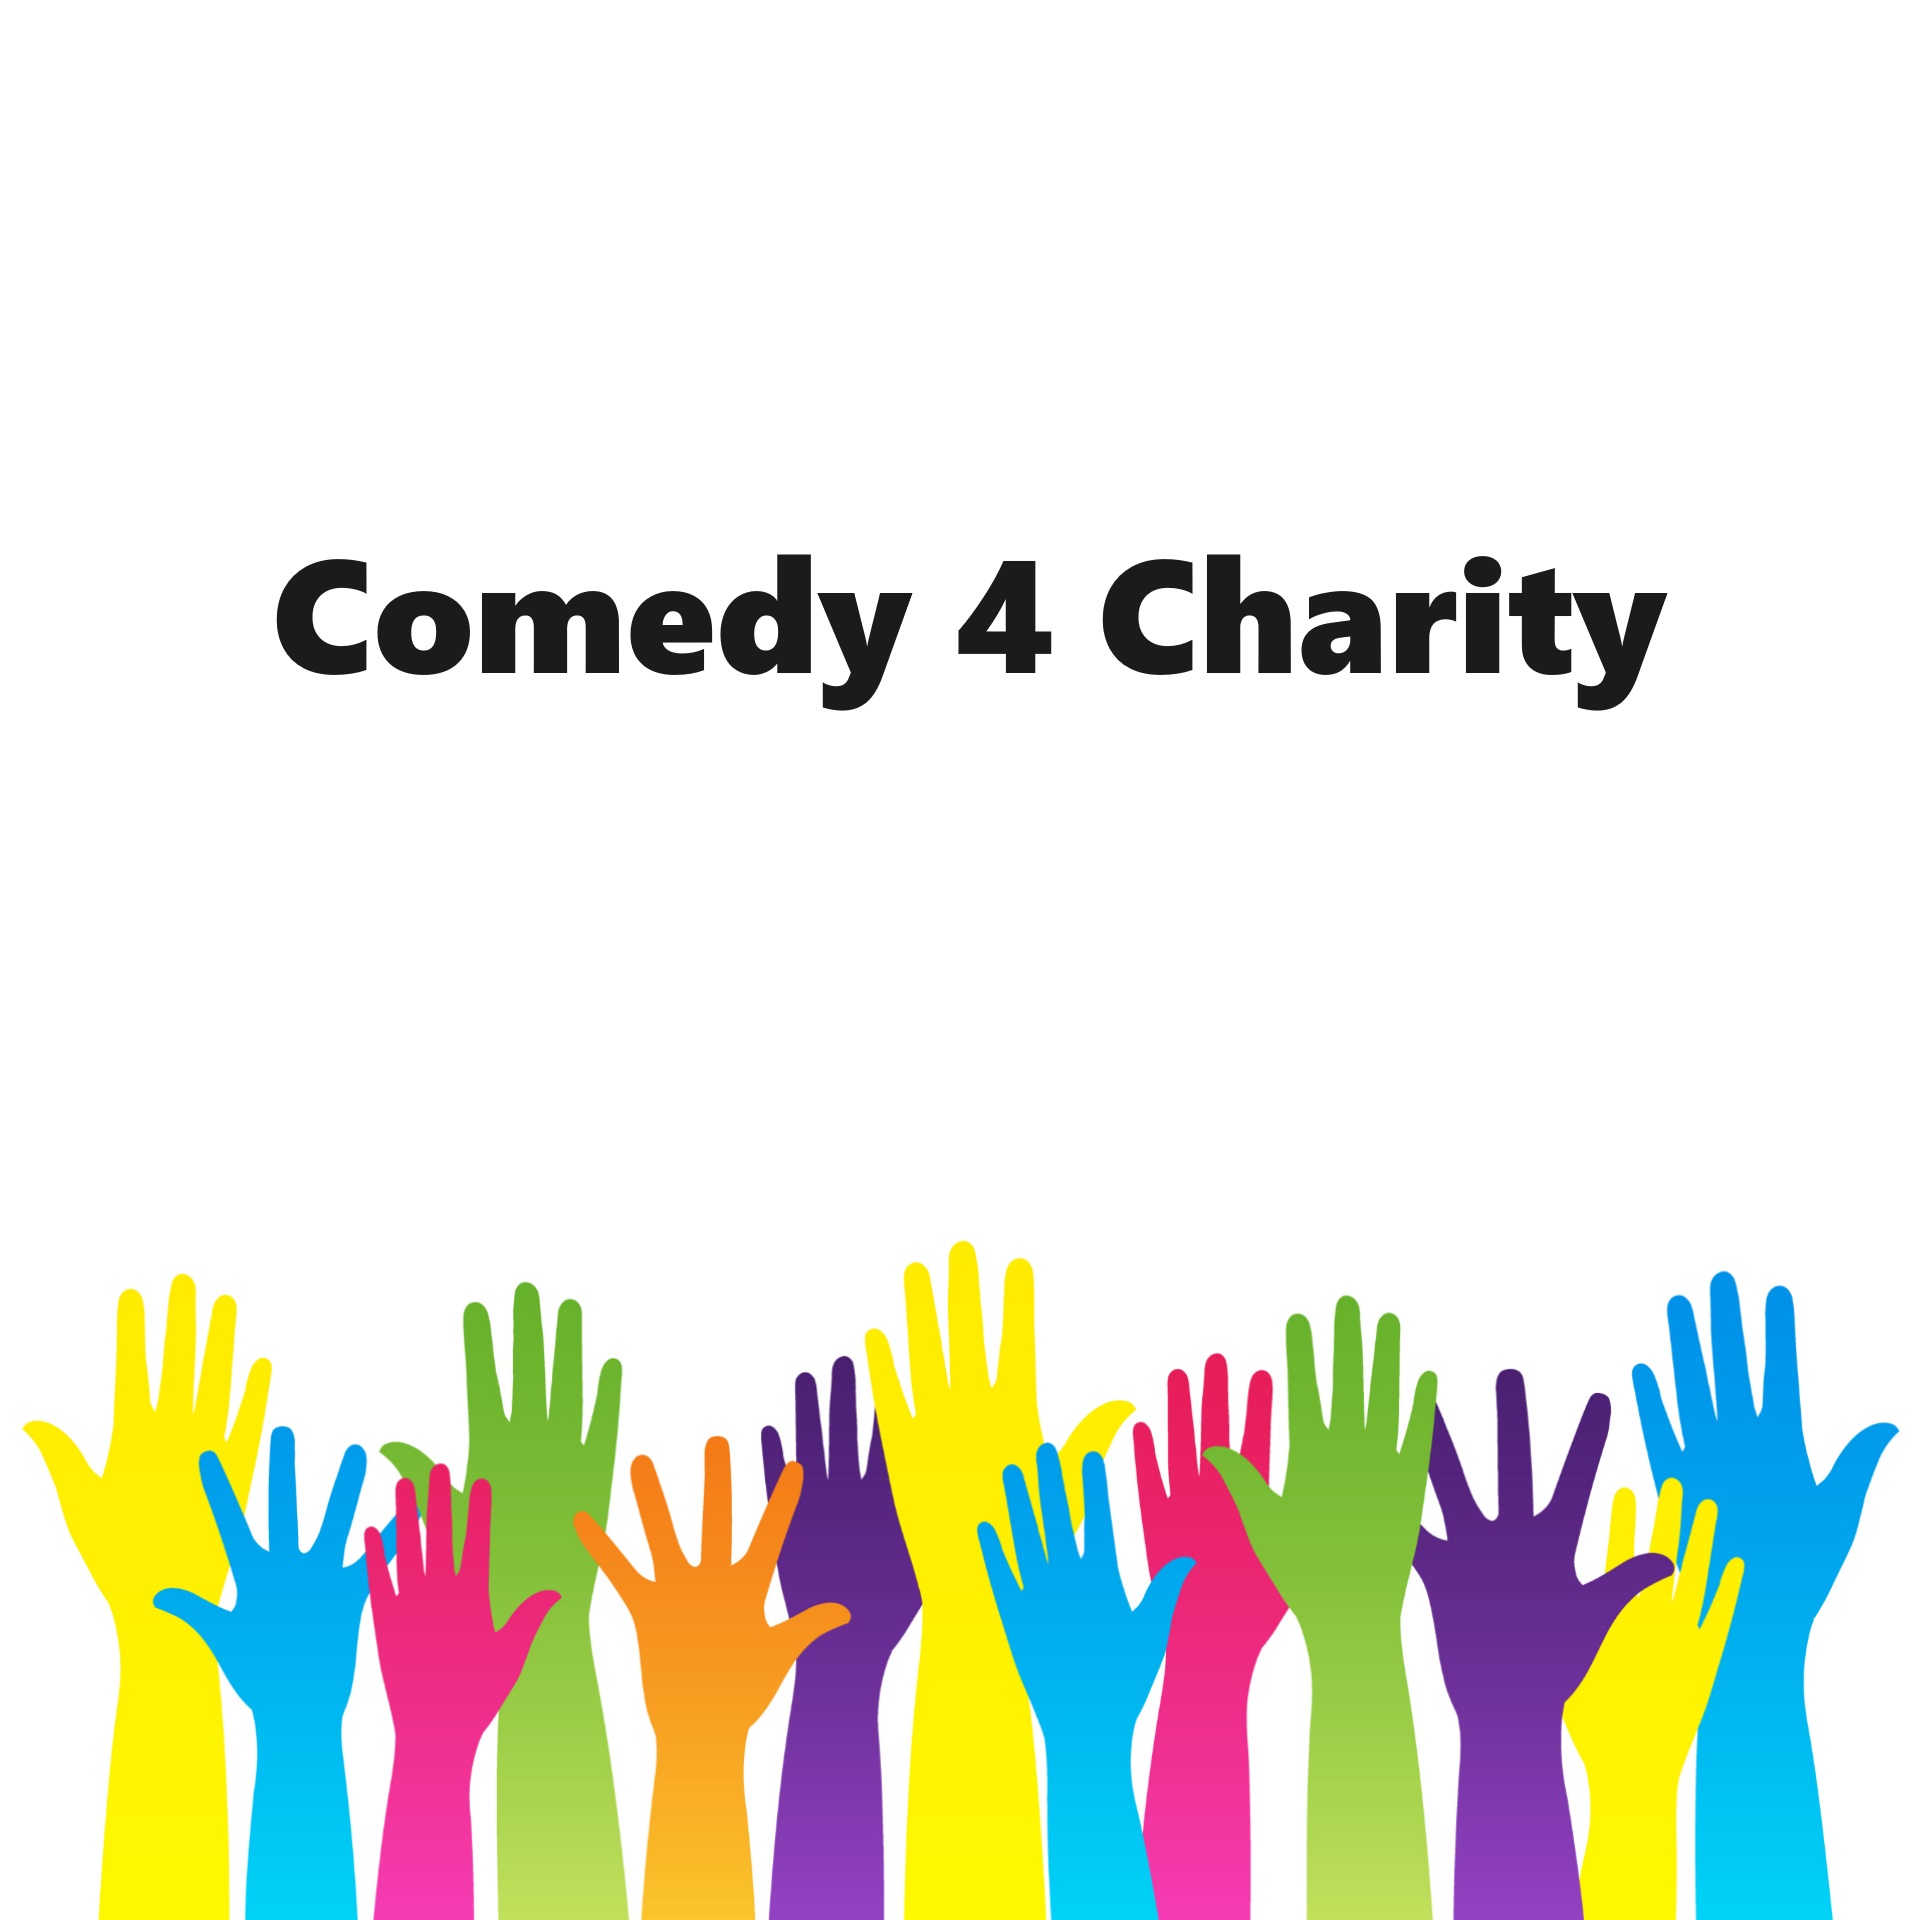 Comedy 4 Charity